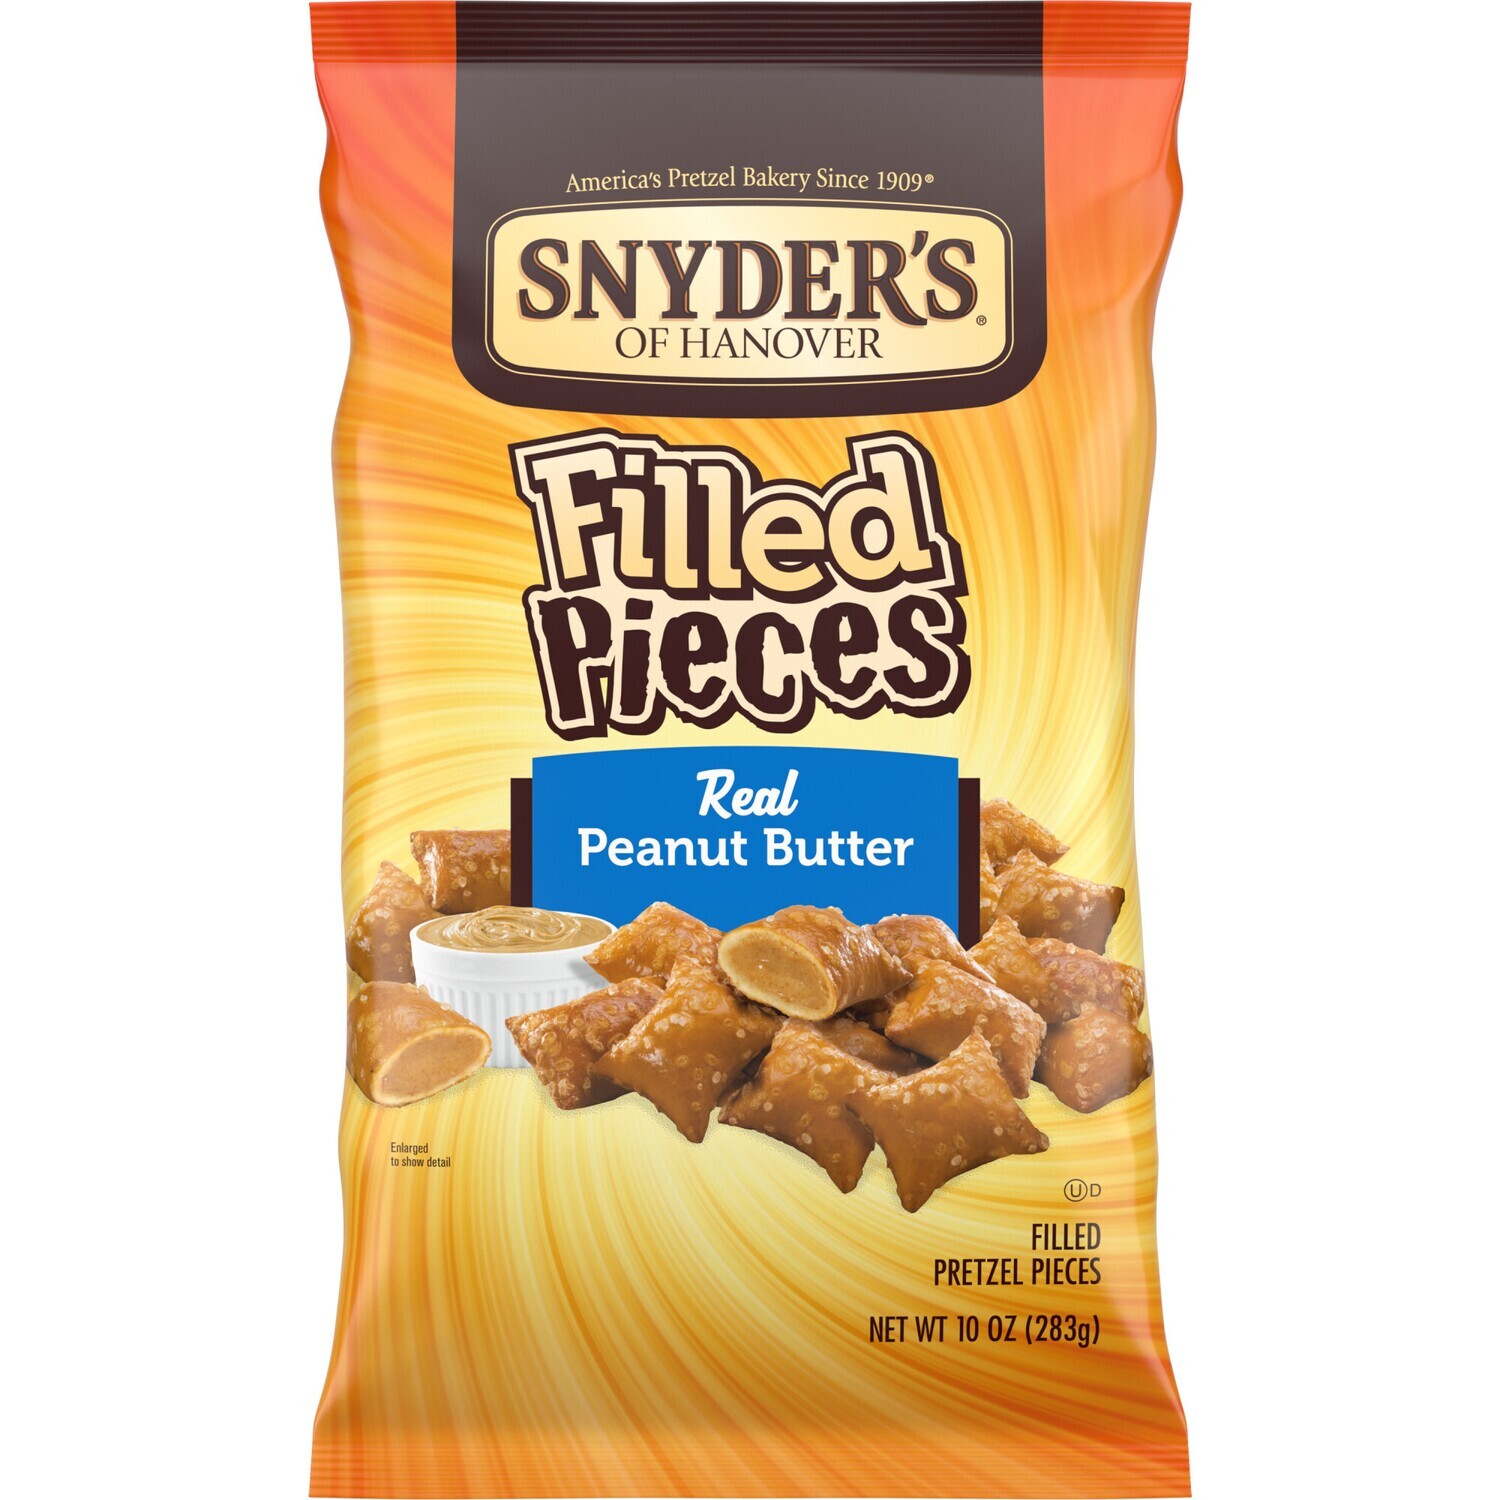 Snyder's Pretzel Pieces     Peanut Butter Filled